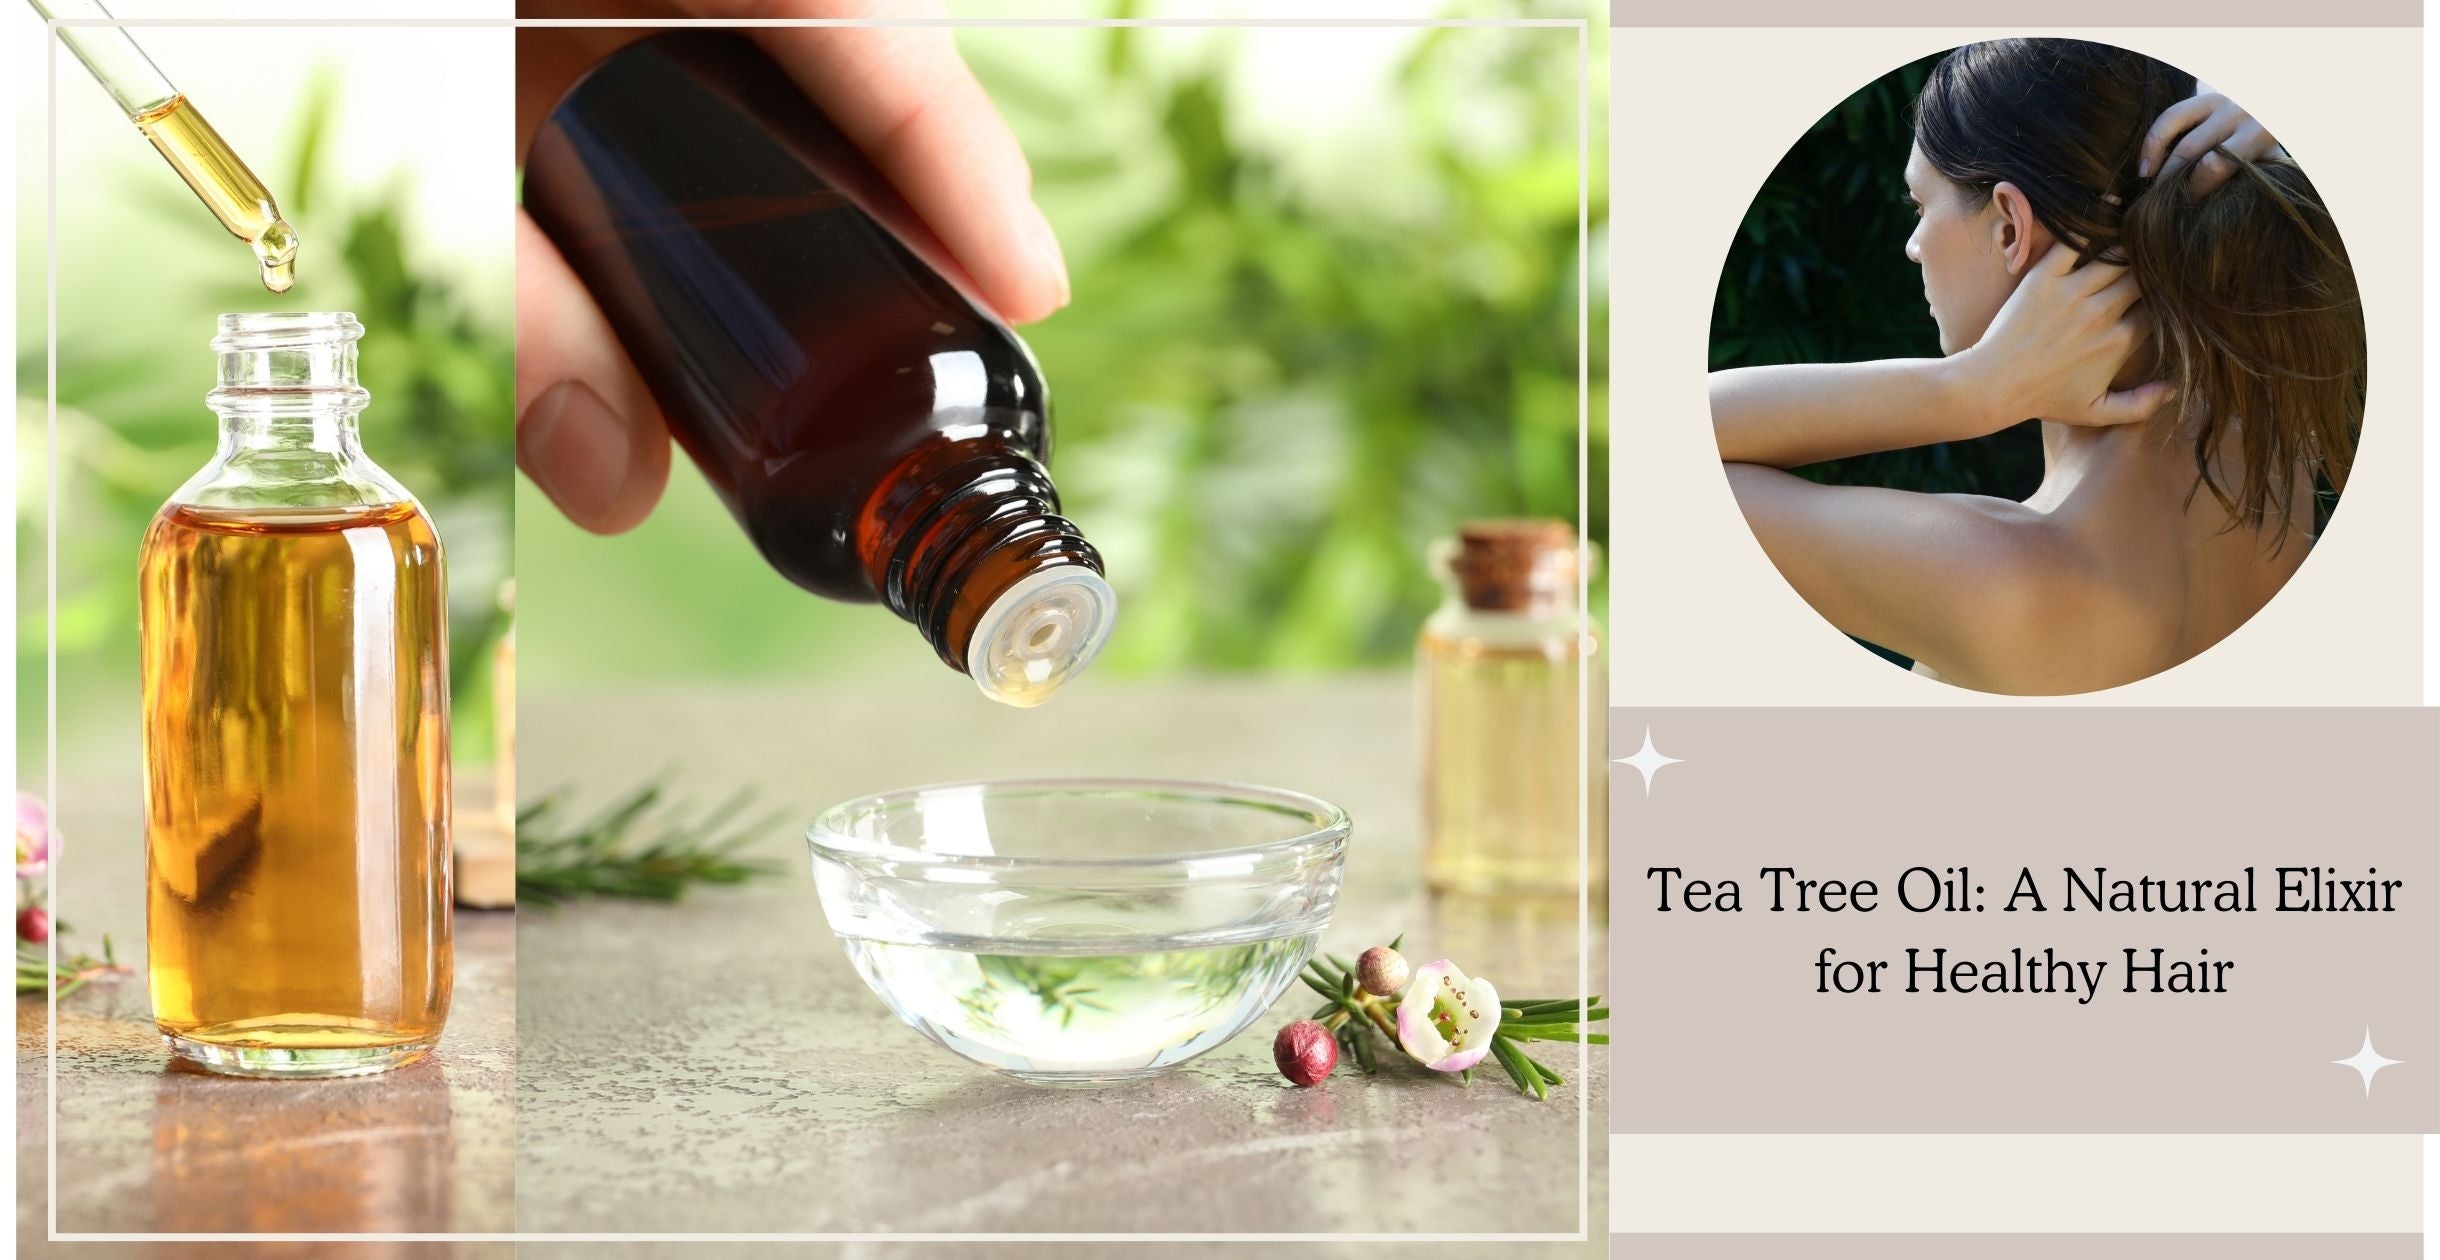 Tea Tree Oil: A Natural Elixir for Healthy Hair